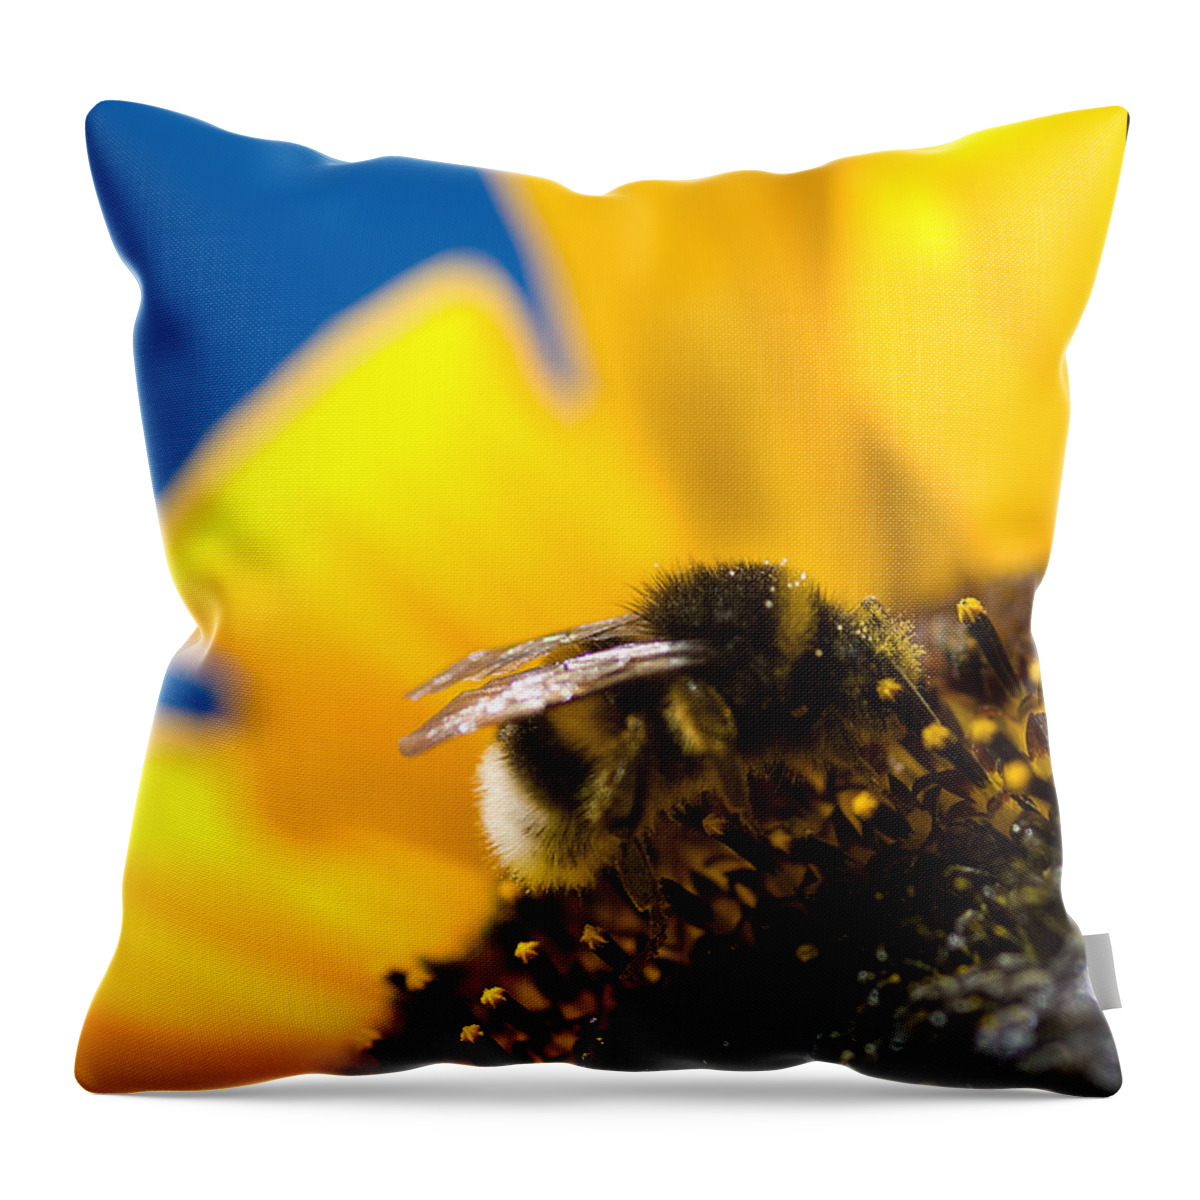 Bumblebee Throw Pillow featuring the digital art Bumblebee by Geir Rosset